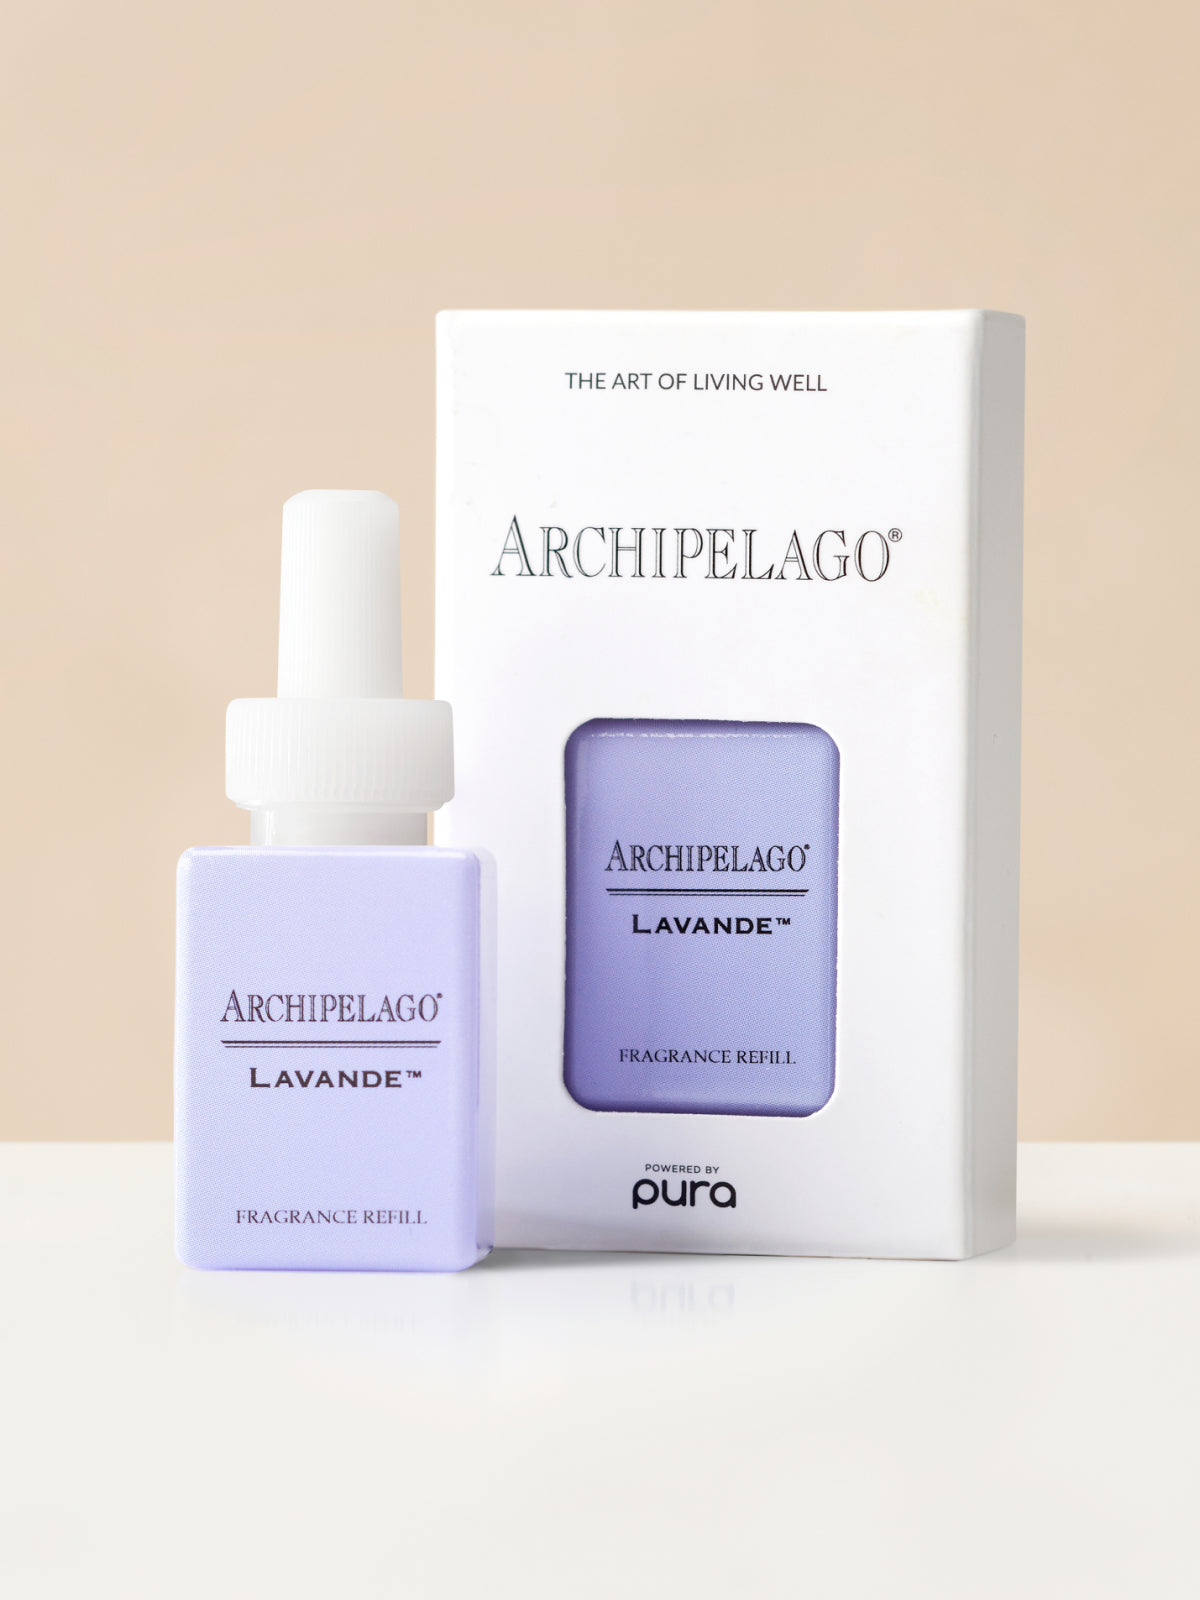 Lavande Pura Smart Vial Fragrance Refill by Archipelago